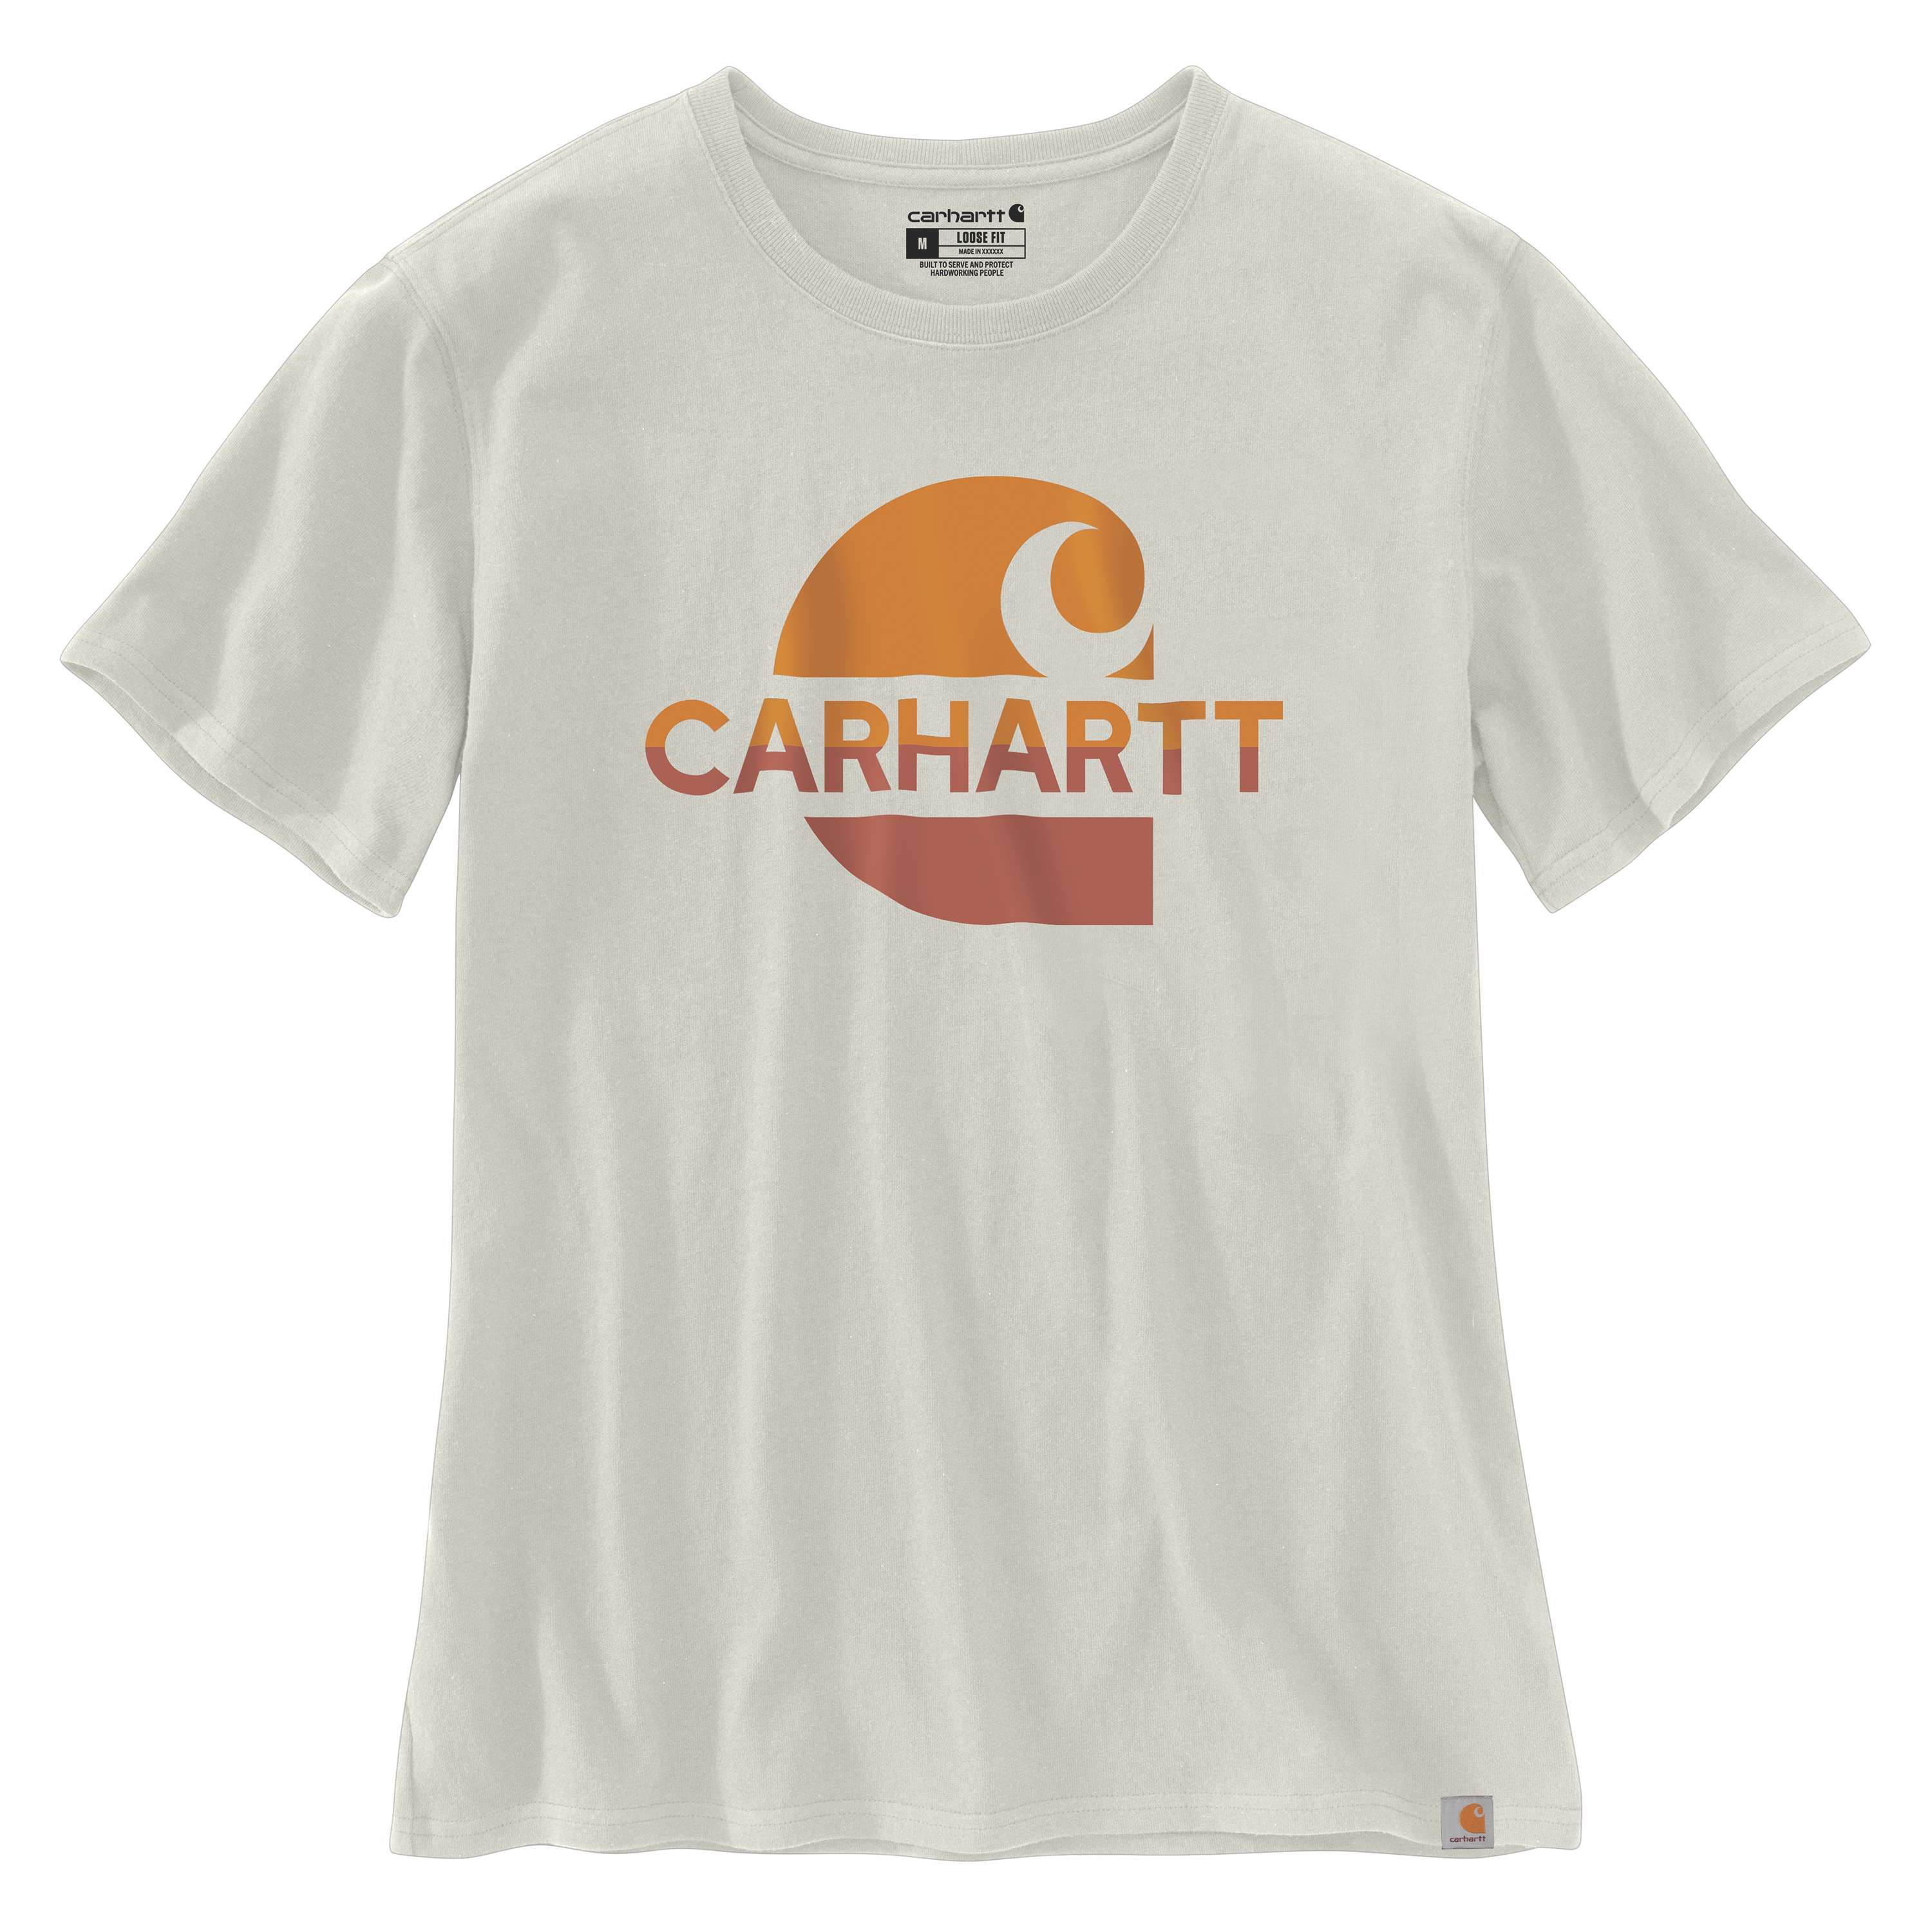 & | Carhartt T-Shirts | Carhartt Graphic Tees